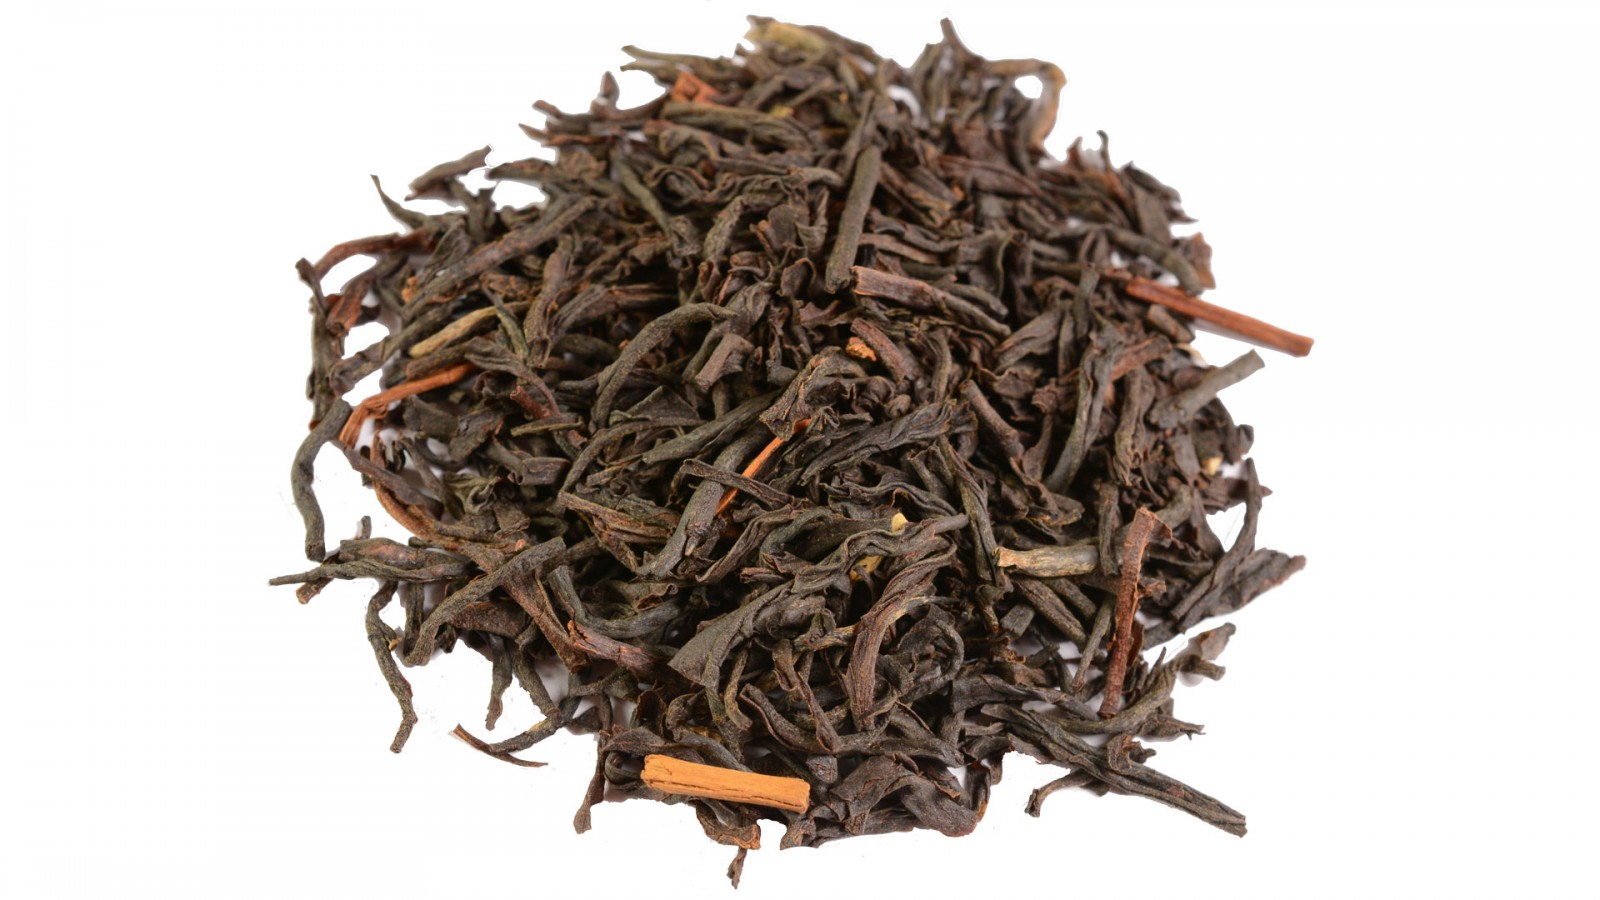 Herbata czarna Ruanda Gdzie kupić 100g